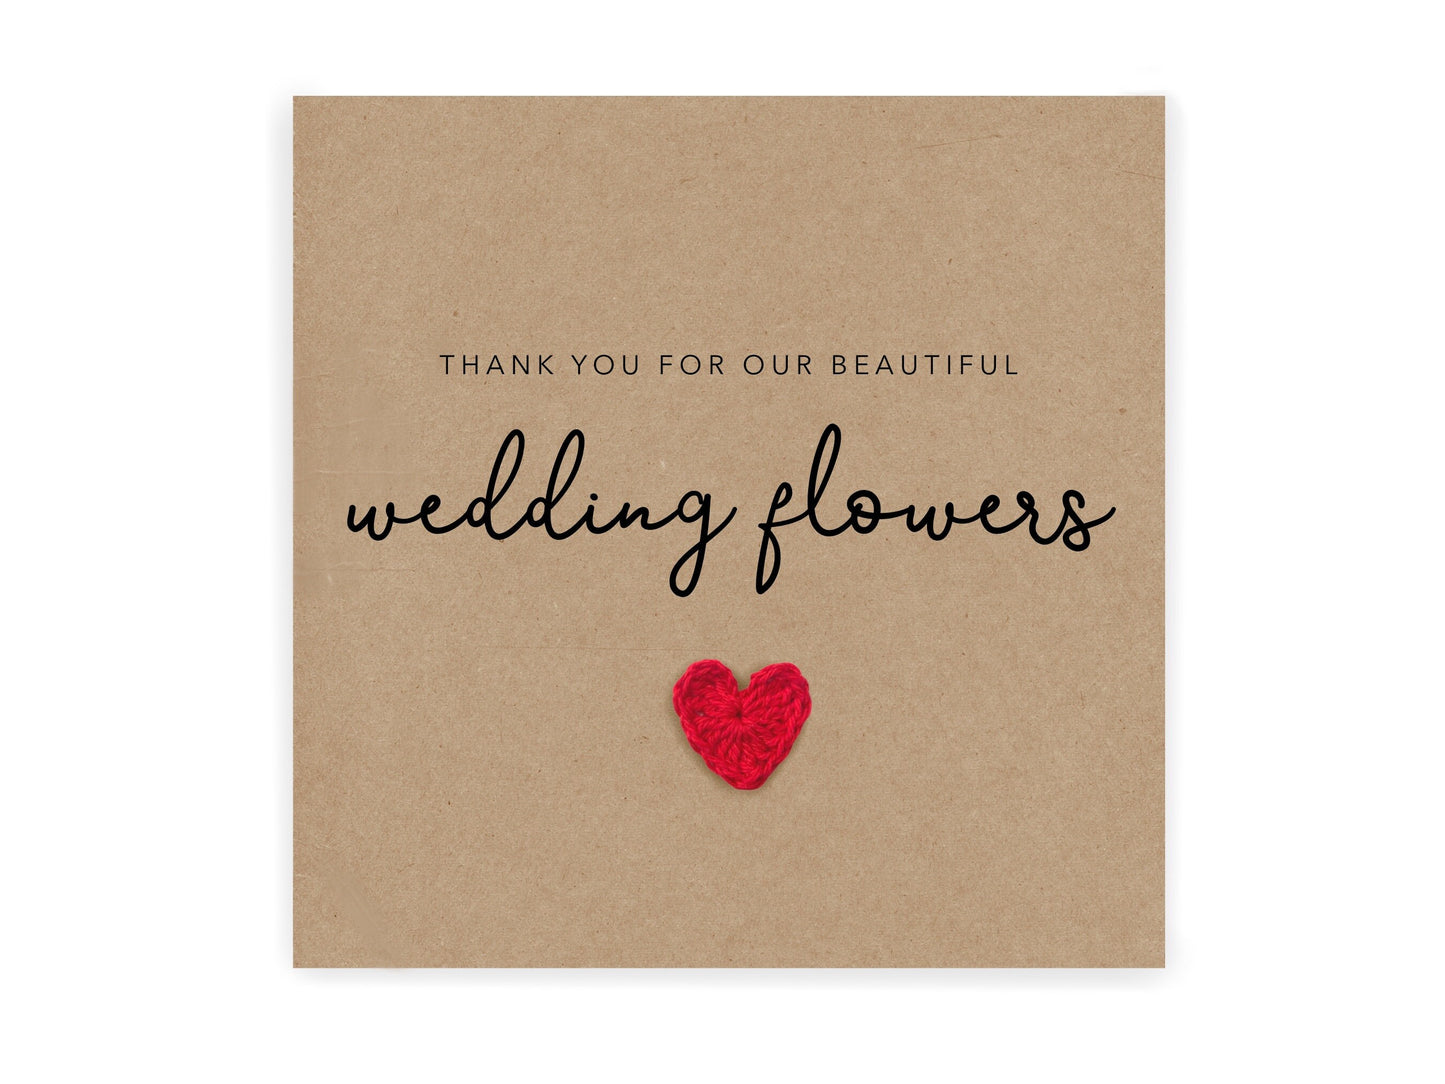 Florist Thank You Card, Wedding Thank You Card For Florist, Thank You For Our Beautiful Wedding Flowers, Simple Wedding Thank You